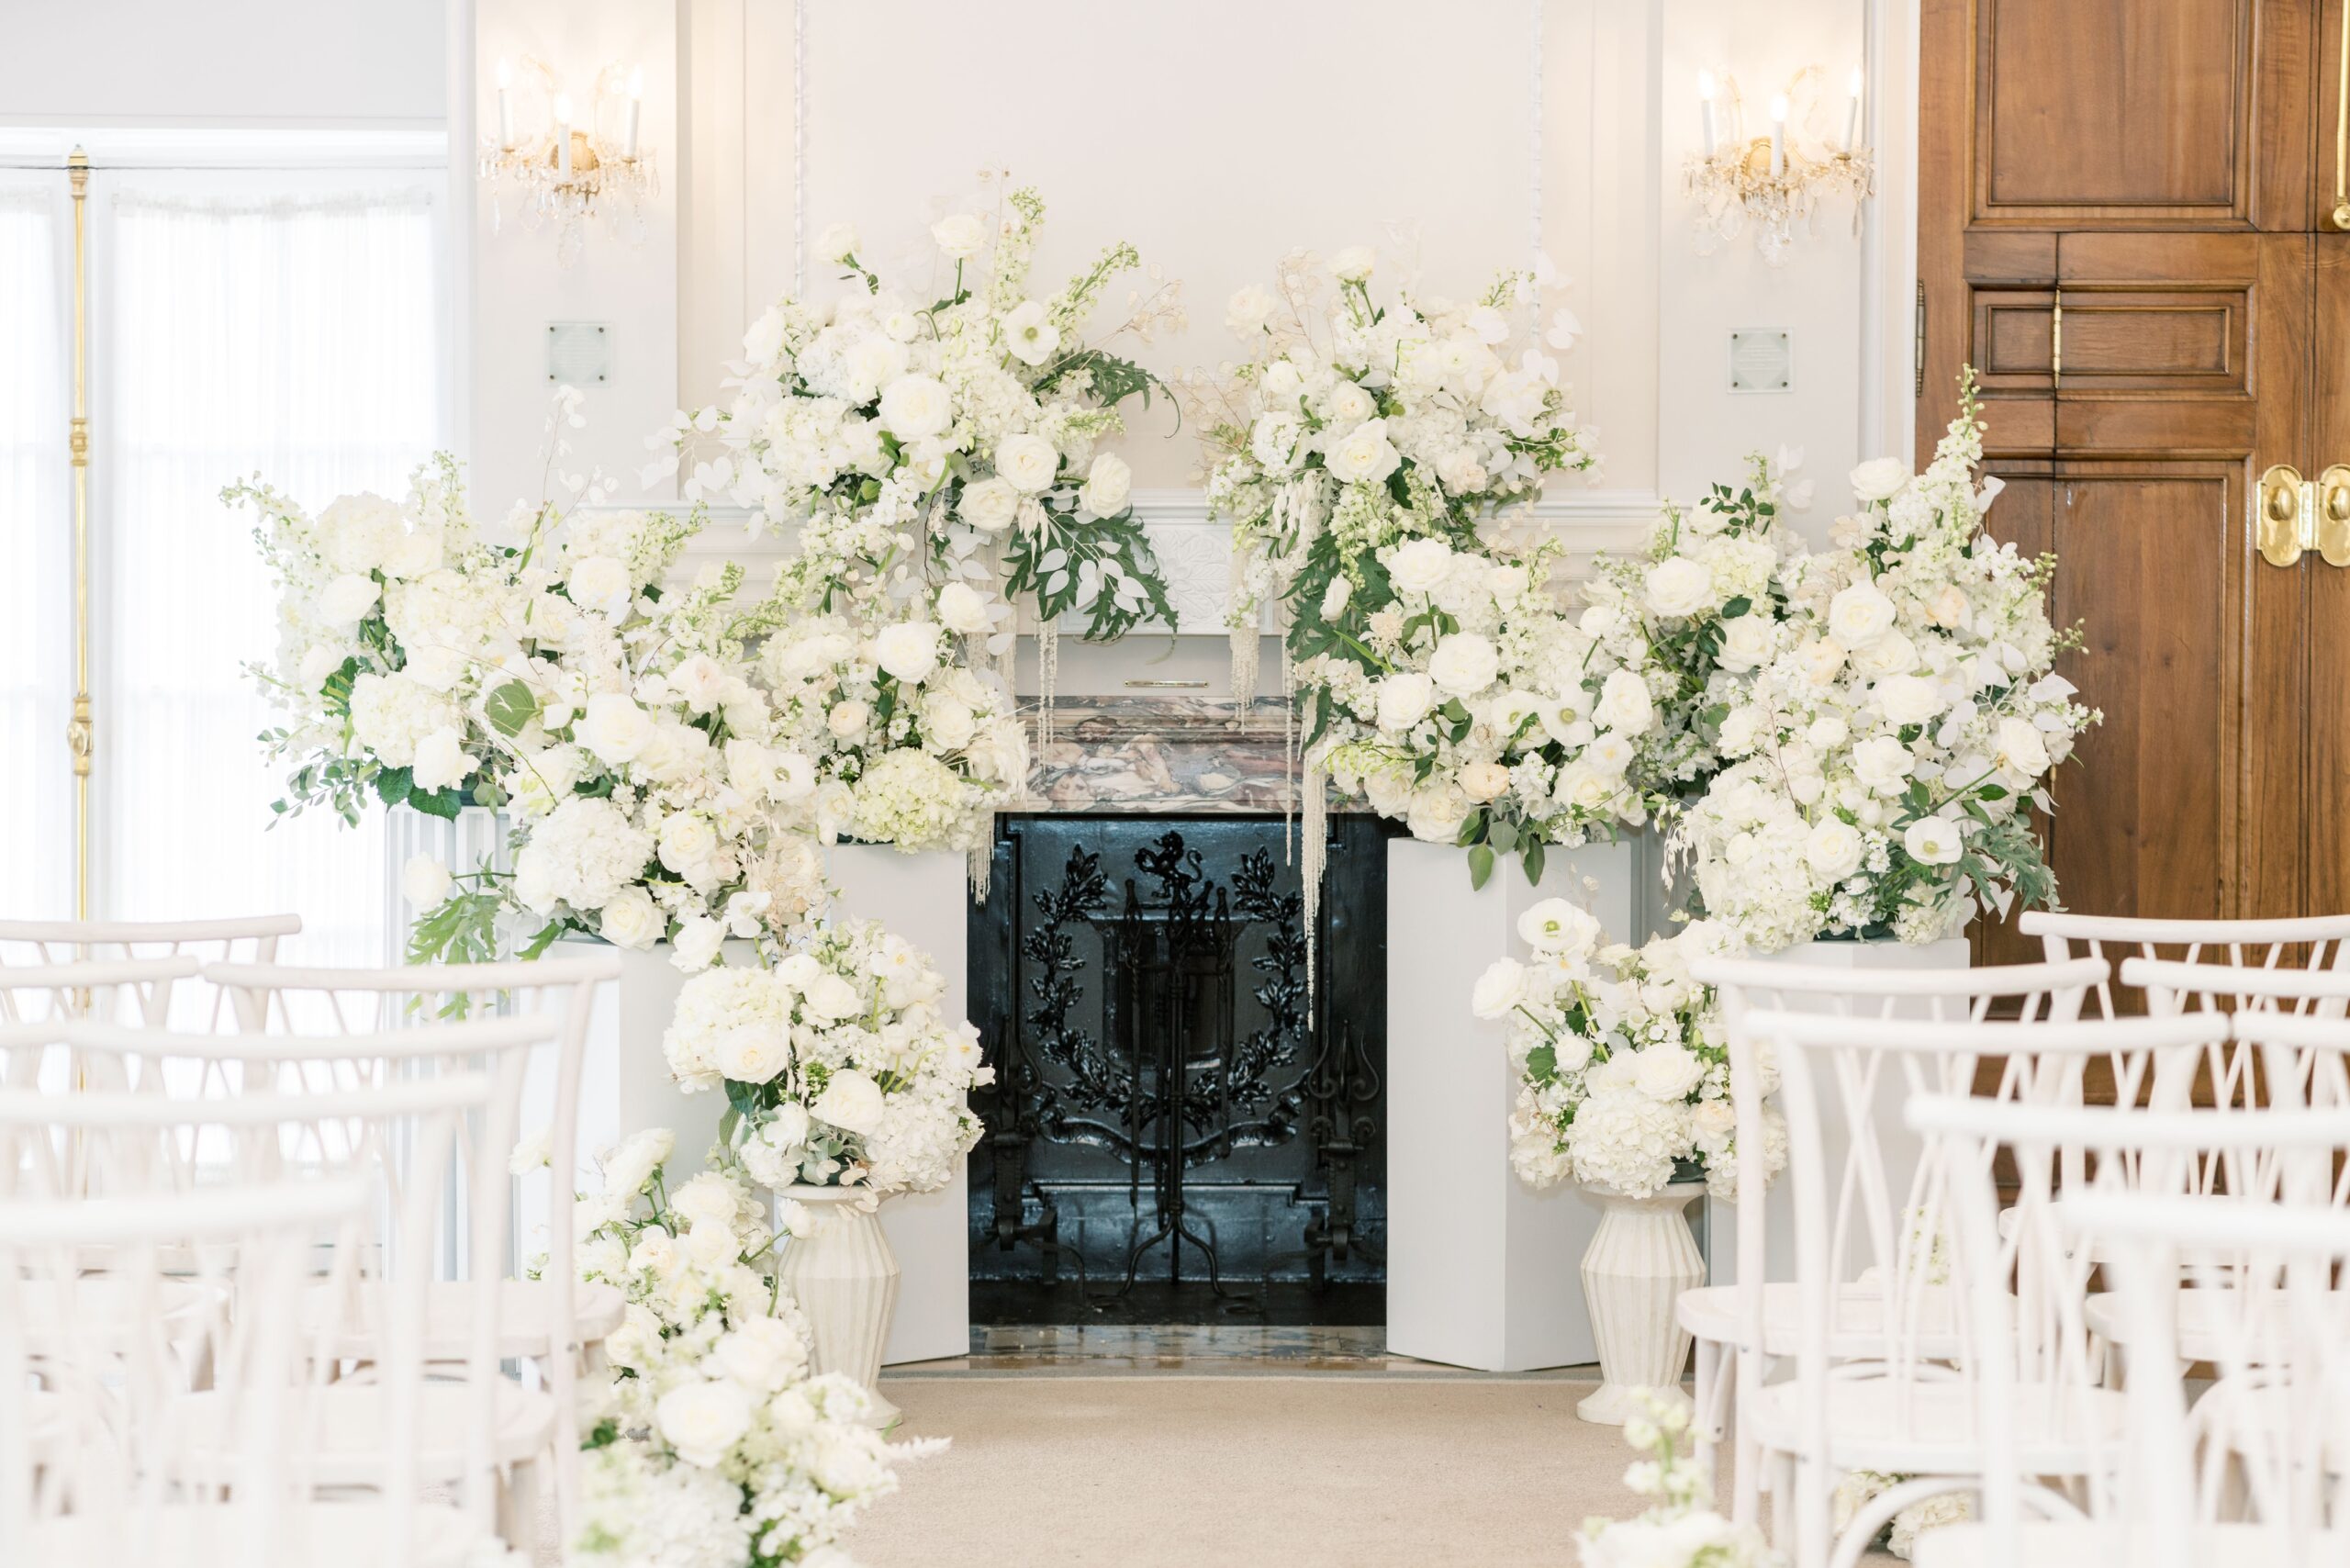 An elegant and timeless black tie spring Meridian House wedding in Washington, DC